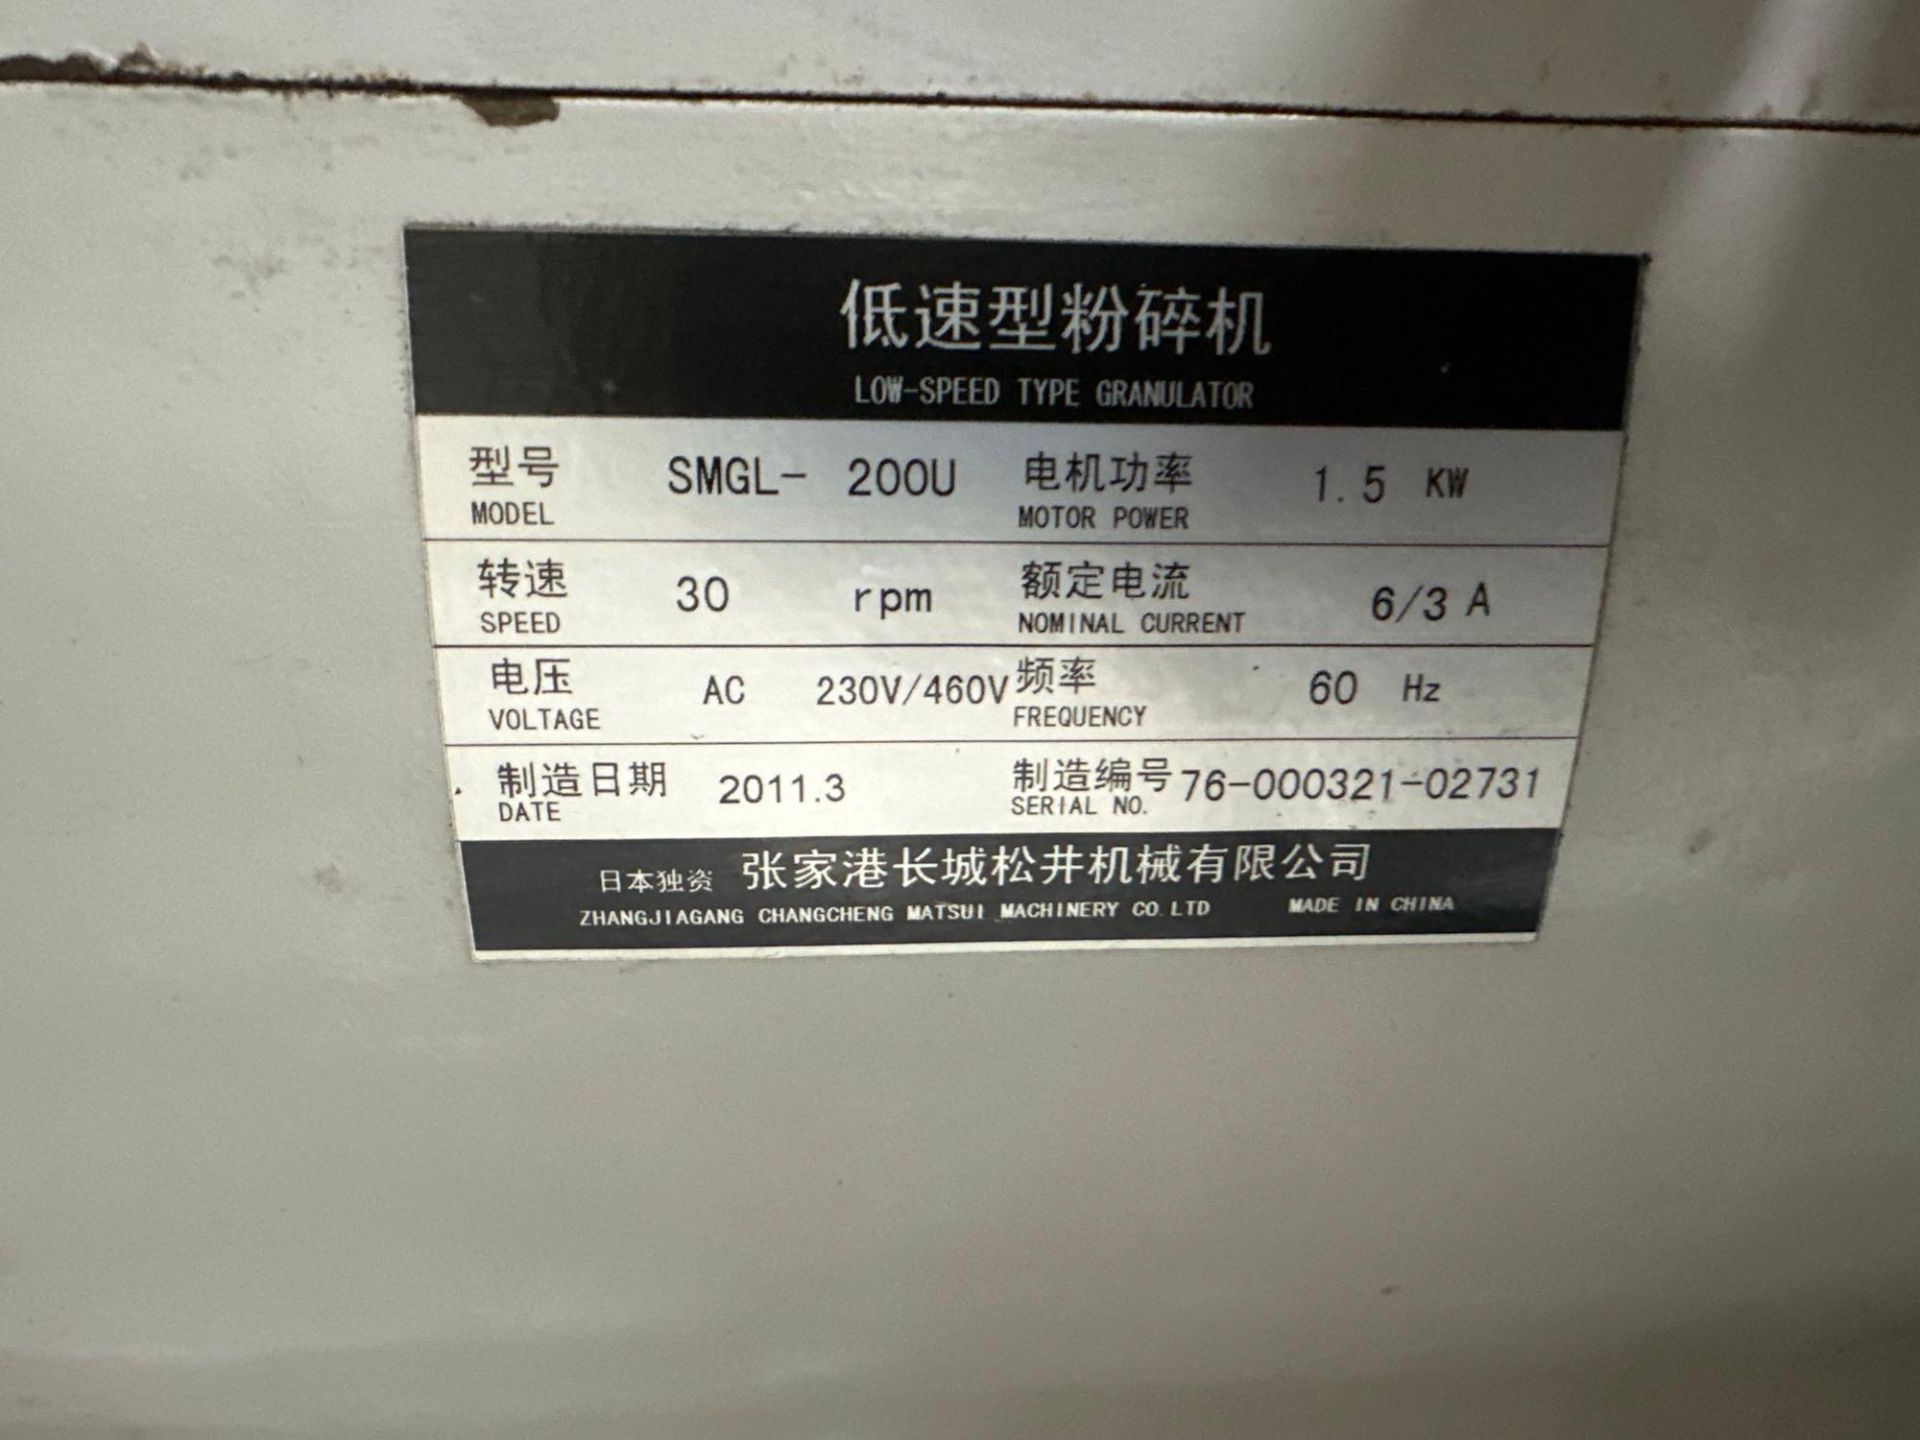 Matsui SMGL-200U Granulator, 30RPM, 230V, s/n 76-000321-02731, 2011 - Image 6 of 6